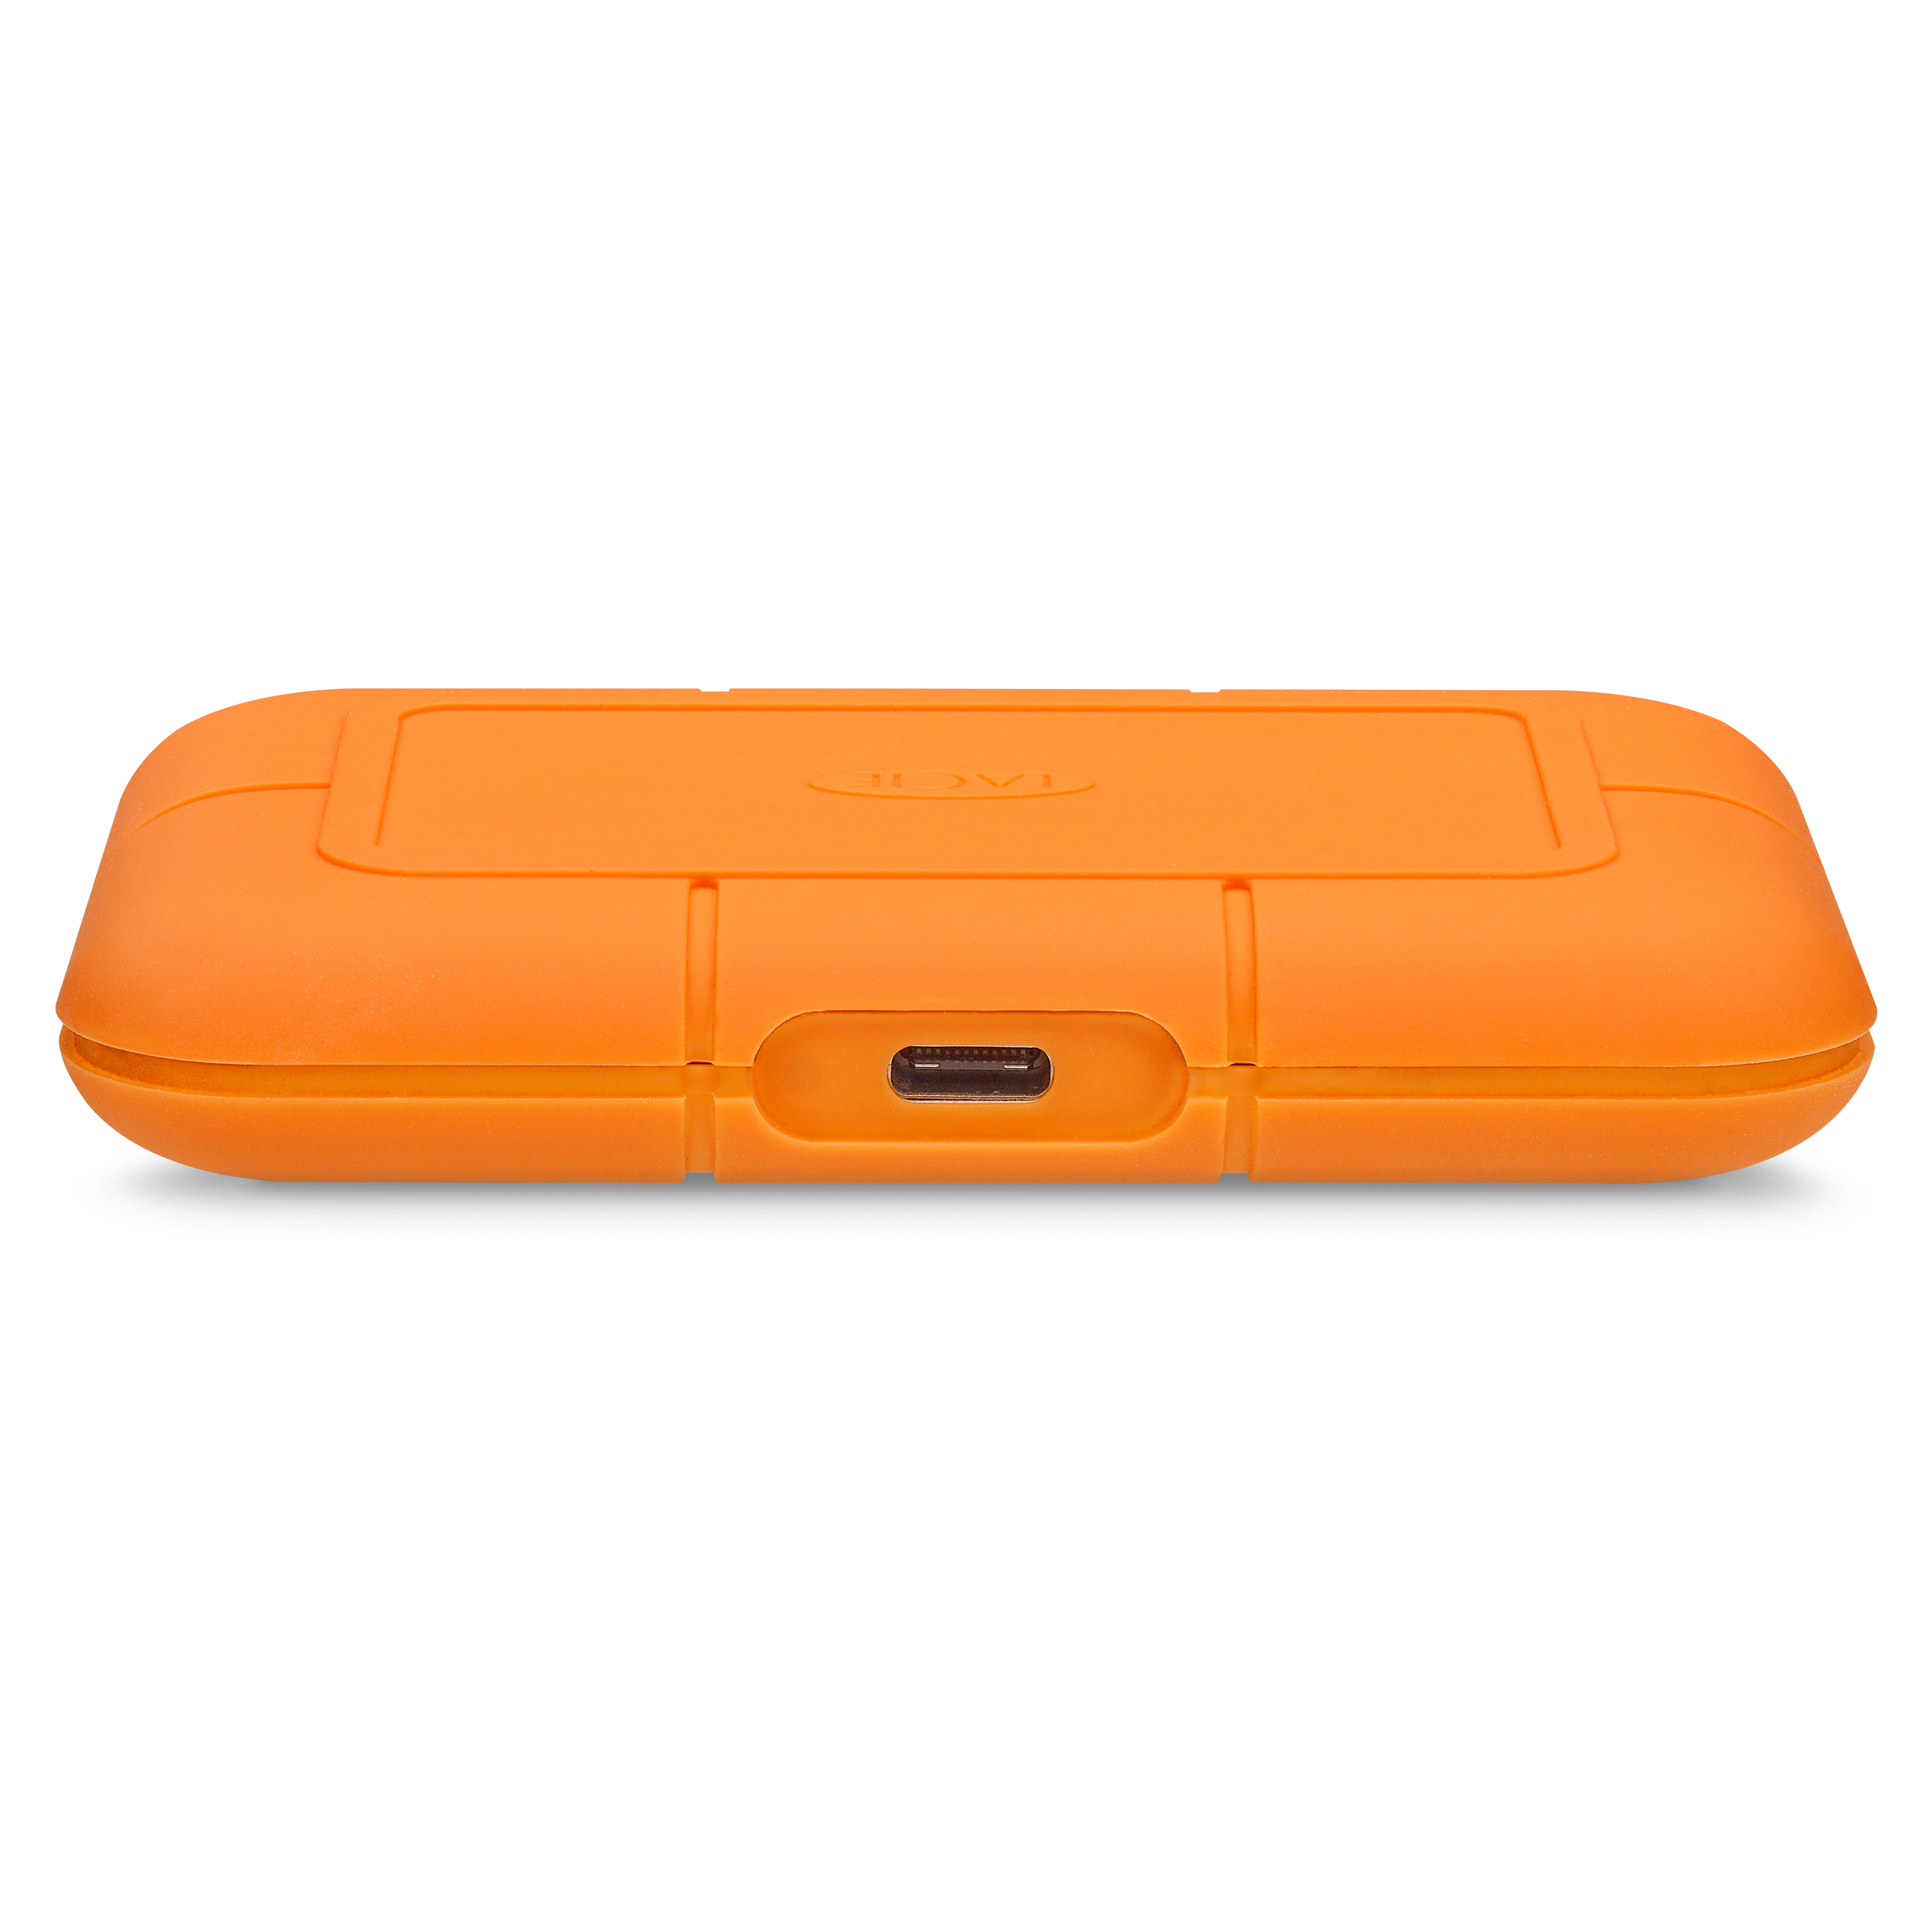 GB 500 LACIE Orange Rugged extern, Festplatte, SSD SSD,